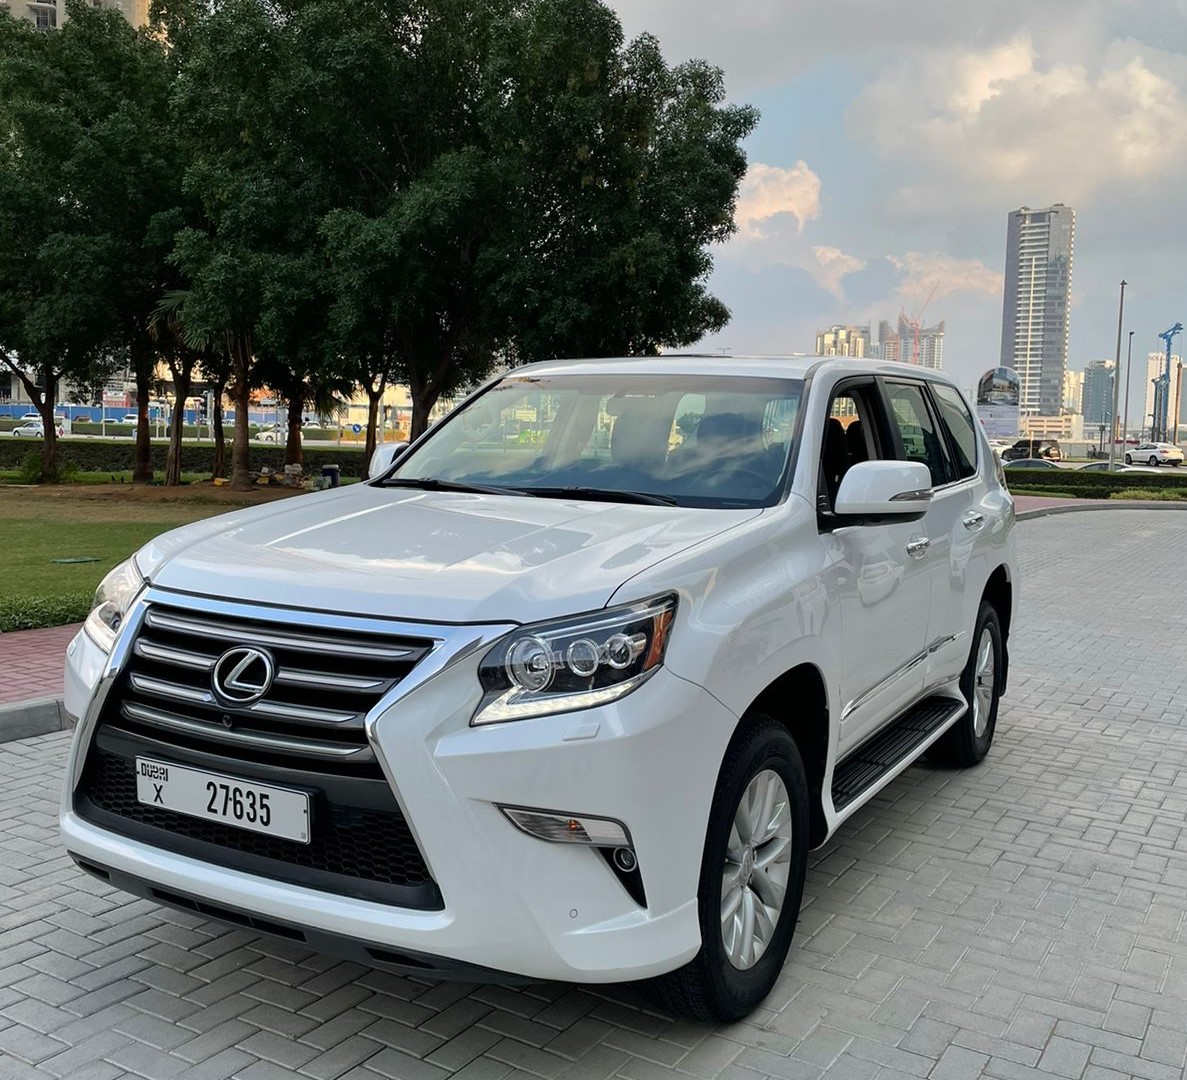 Rent a Car LEXUS GX 2018 By Class Cars Rental In Dubai , UAE